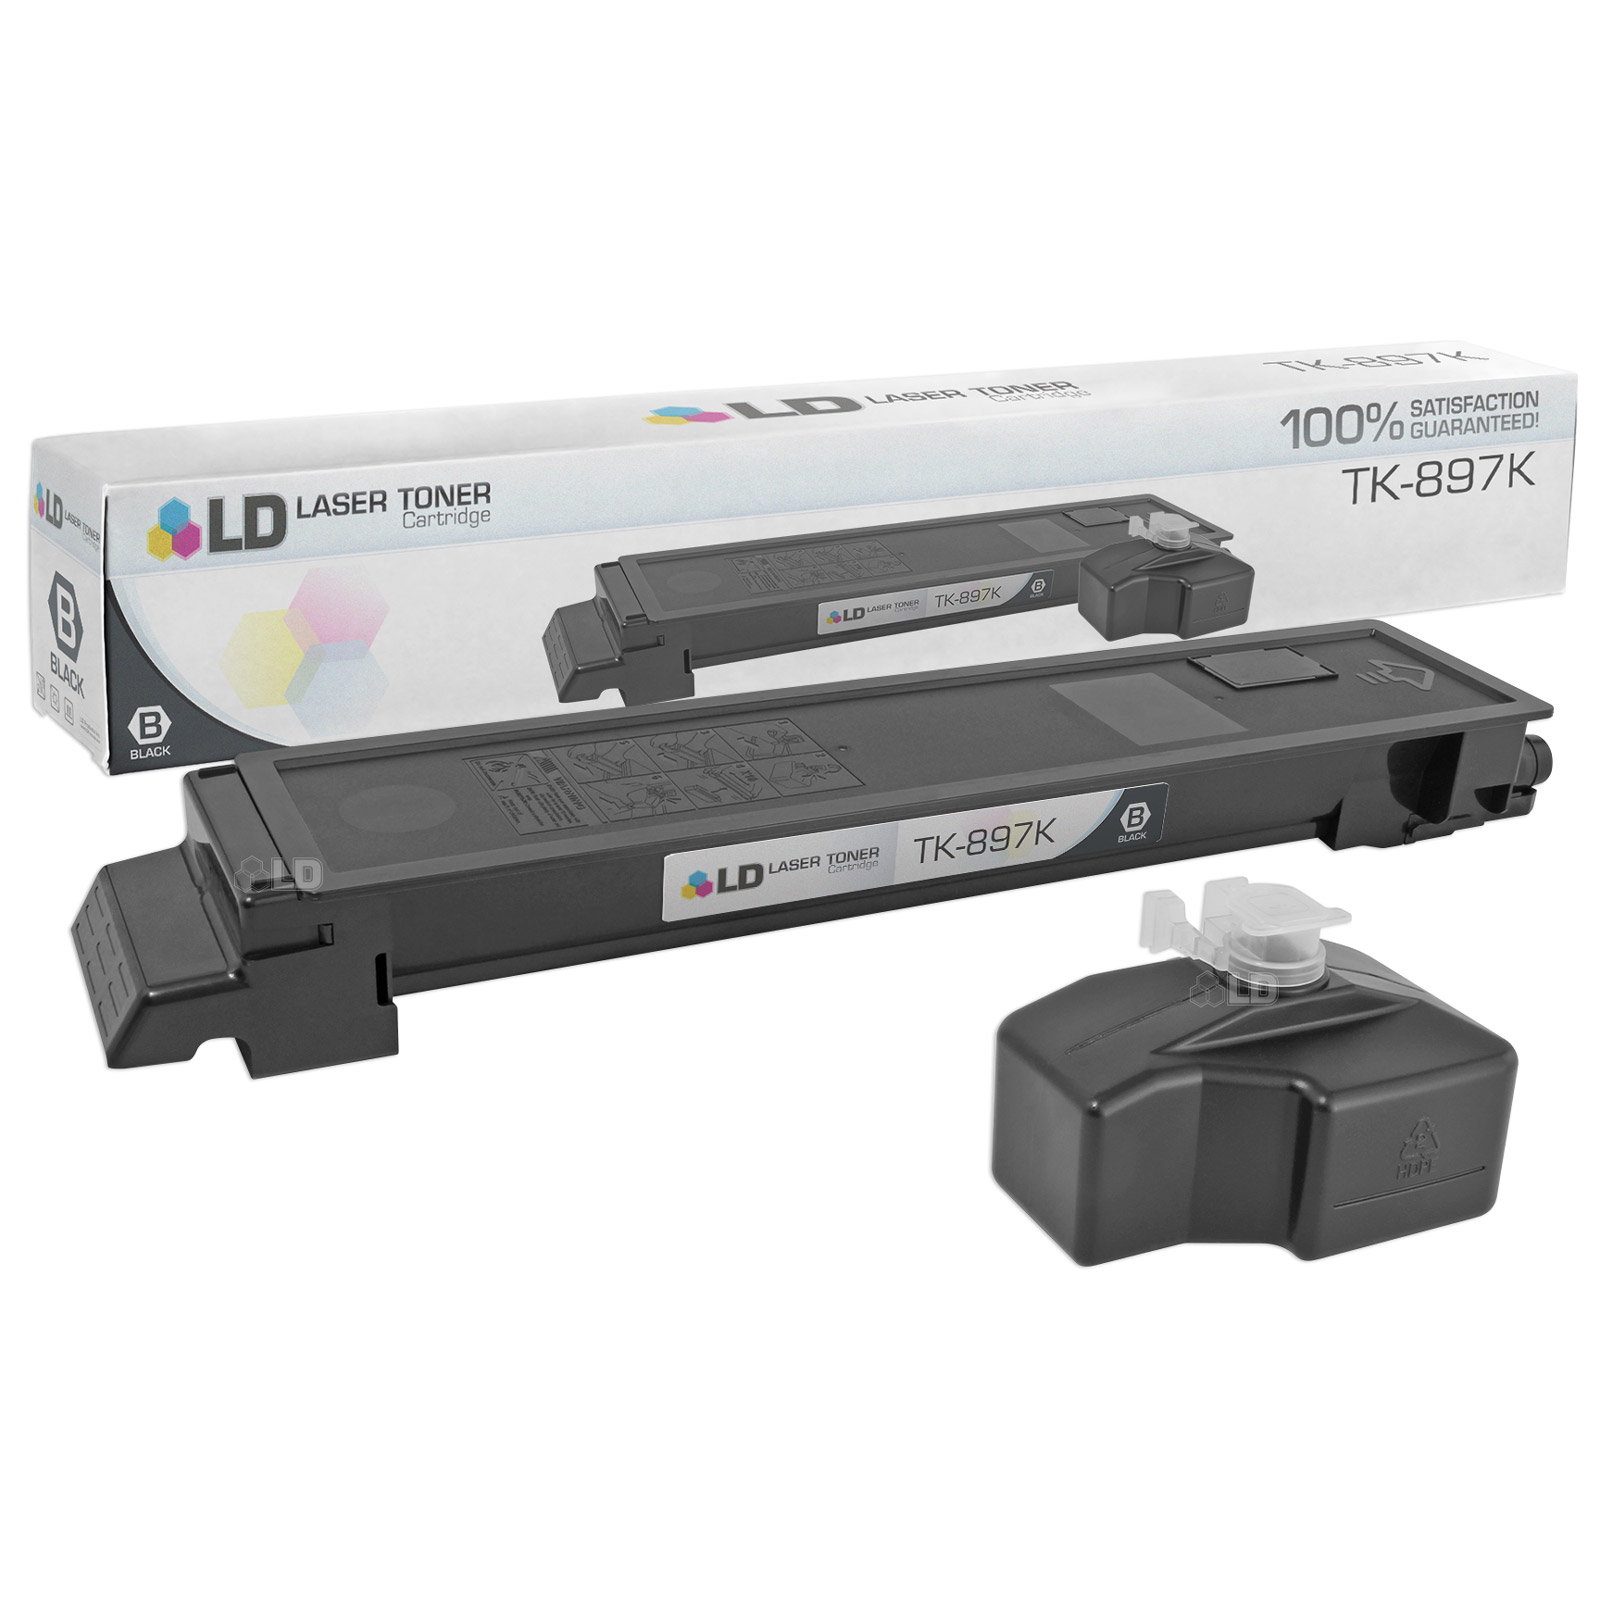 LD Compatible Replacement for Kyocera-Mita TK-897K Black Laser Toner Cartridge for use in Kyocera-Mita TASKalfa 205c, 255, 255c, FS-C8520MFP, and FS-C8525MFP s - image 1 of 1